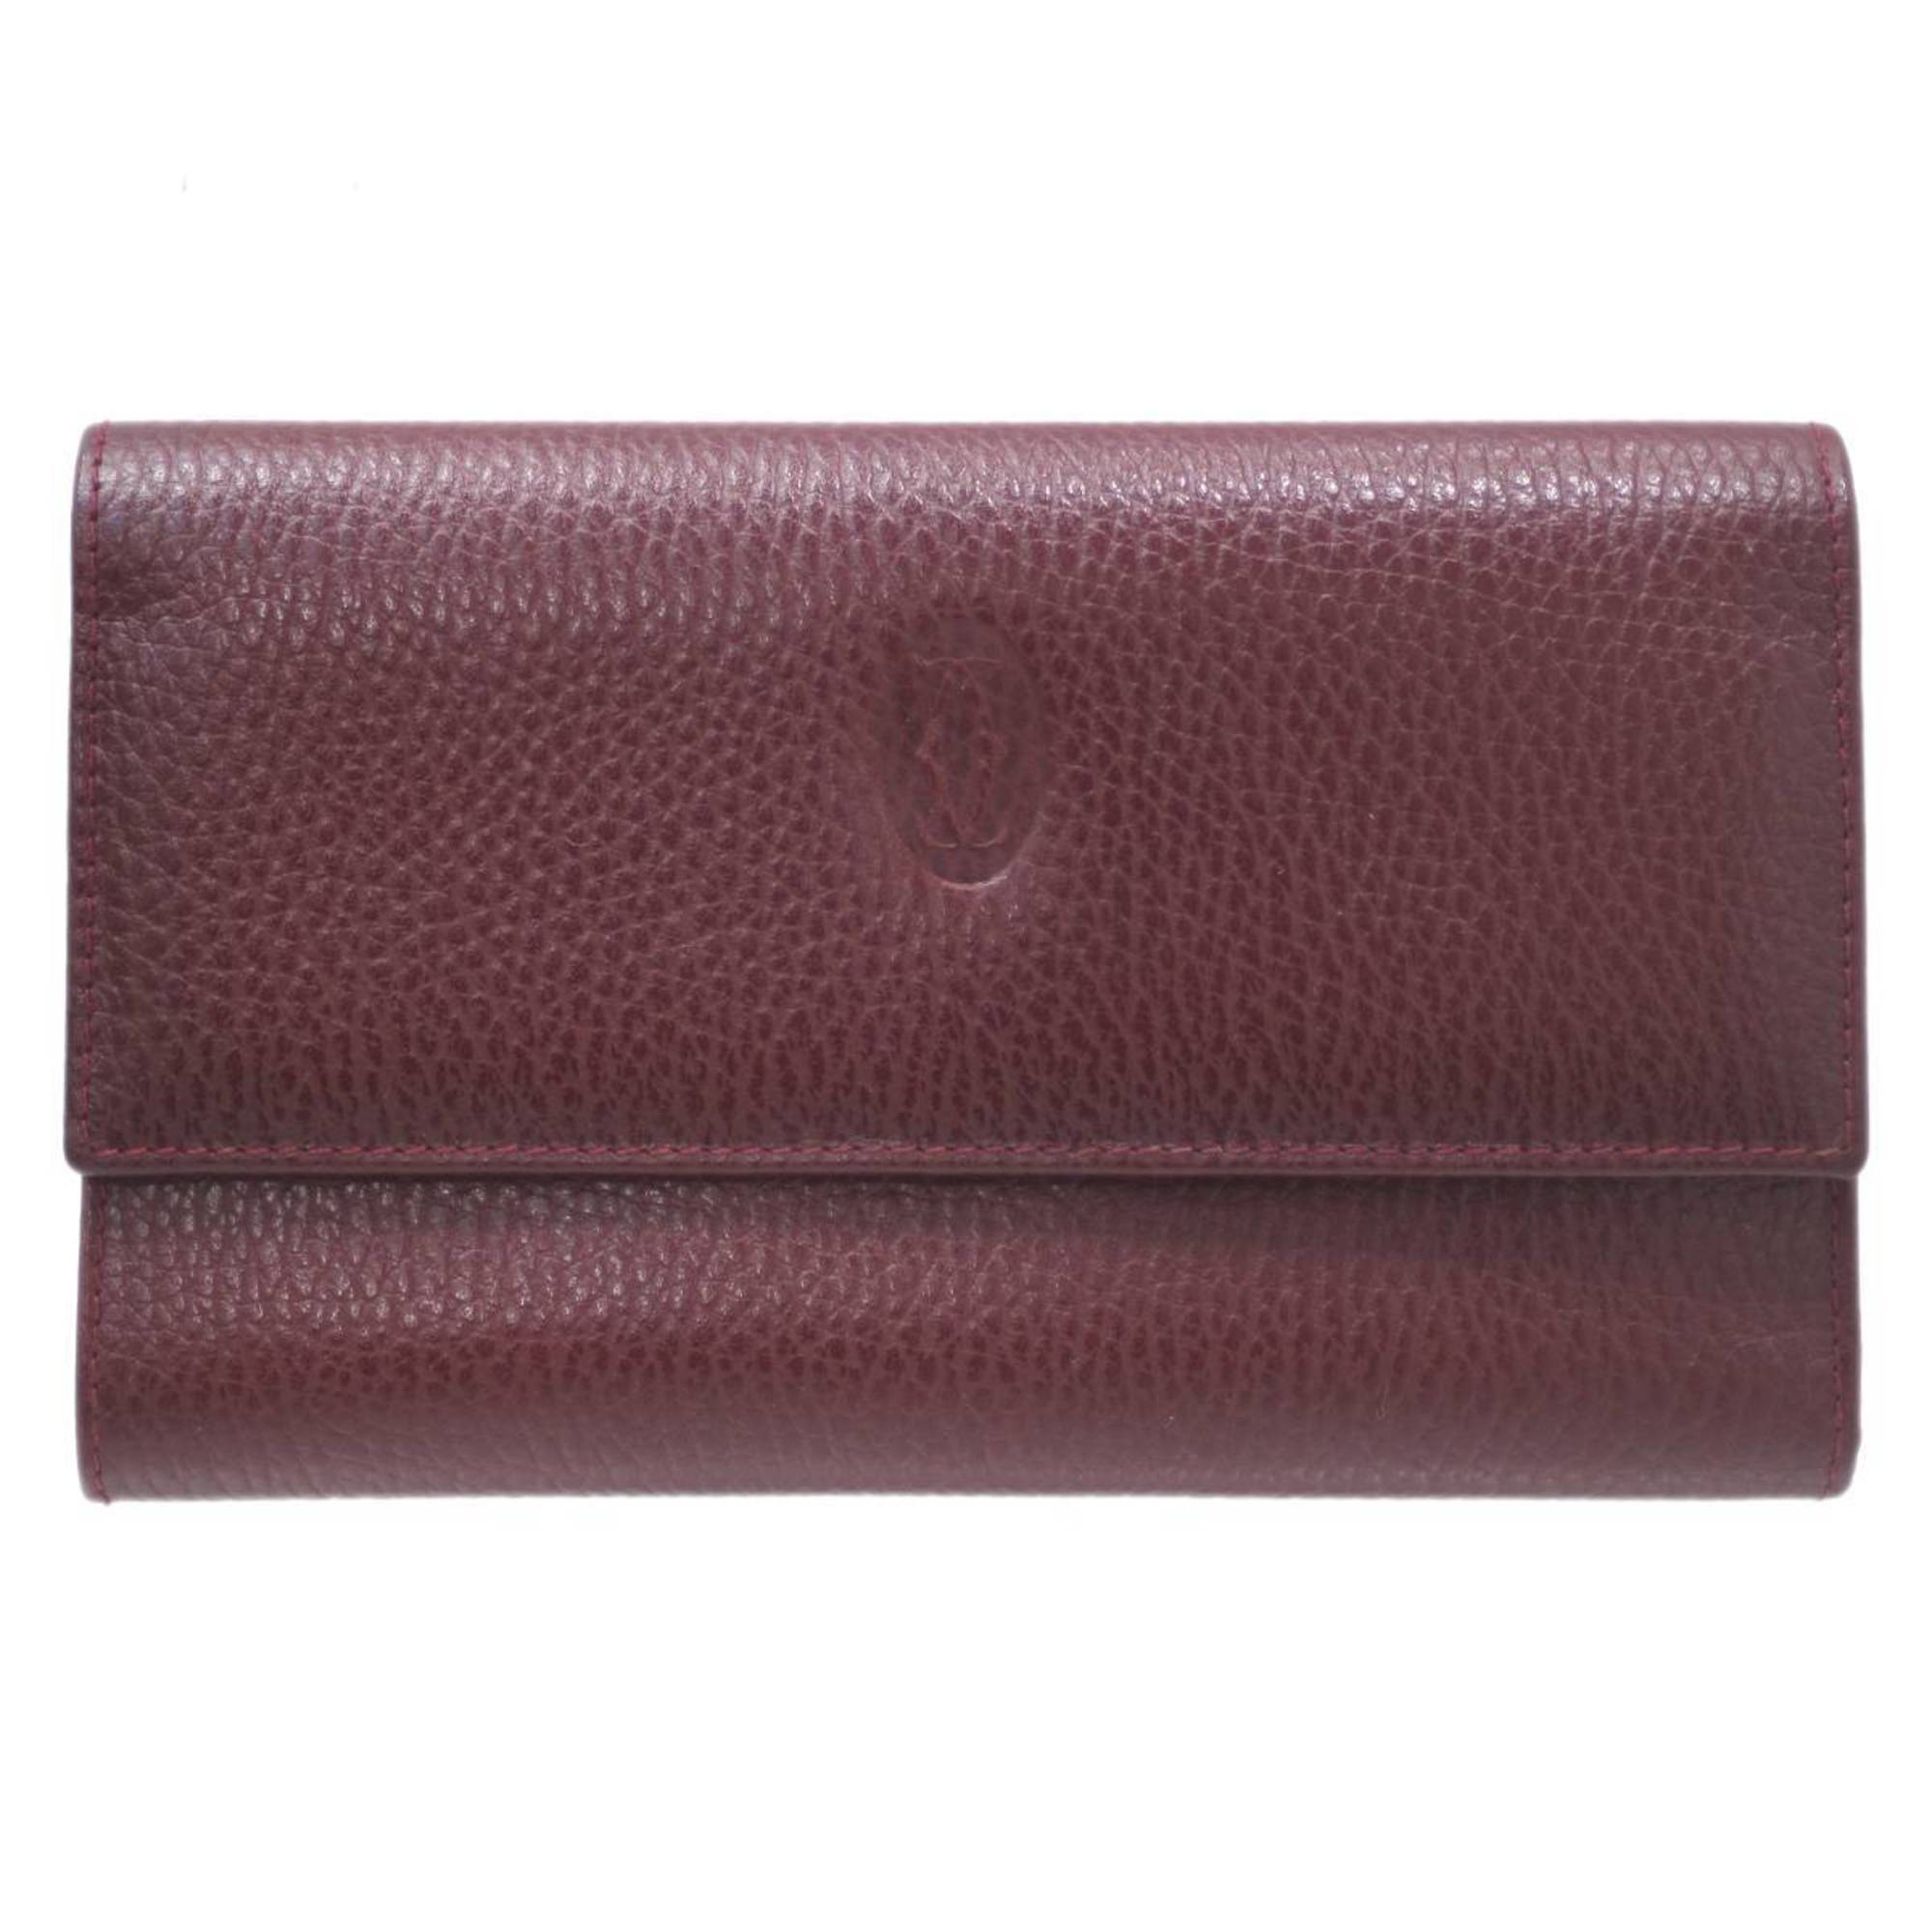 Cartier 3-fold wallet must-have Bordeaux leather